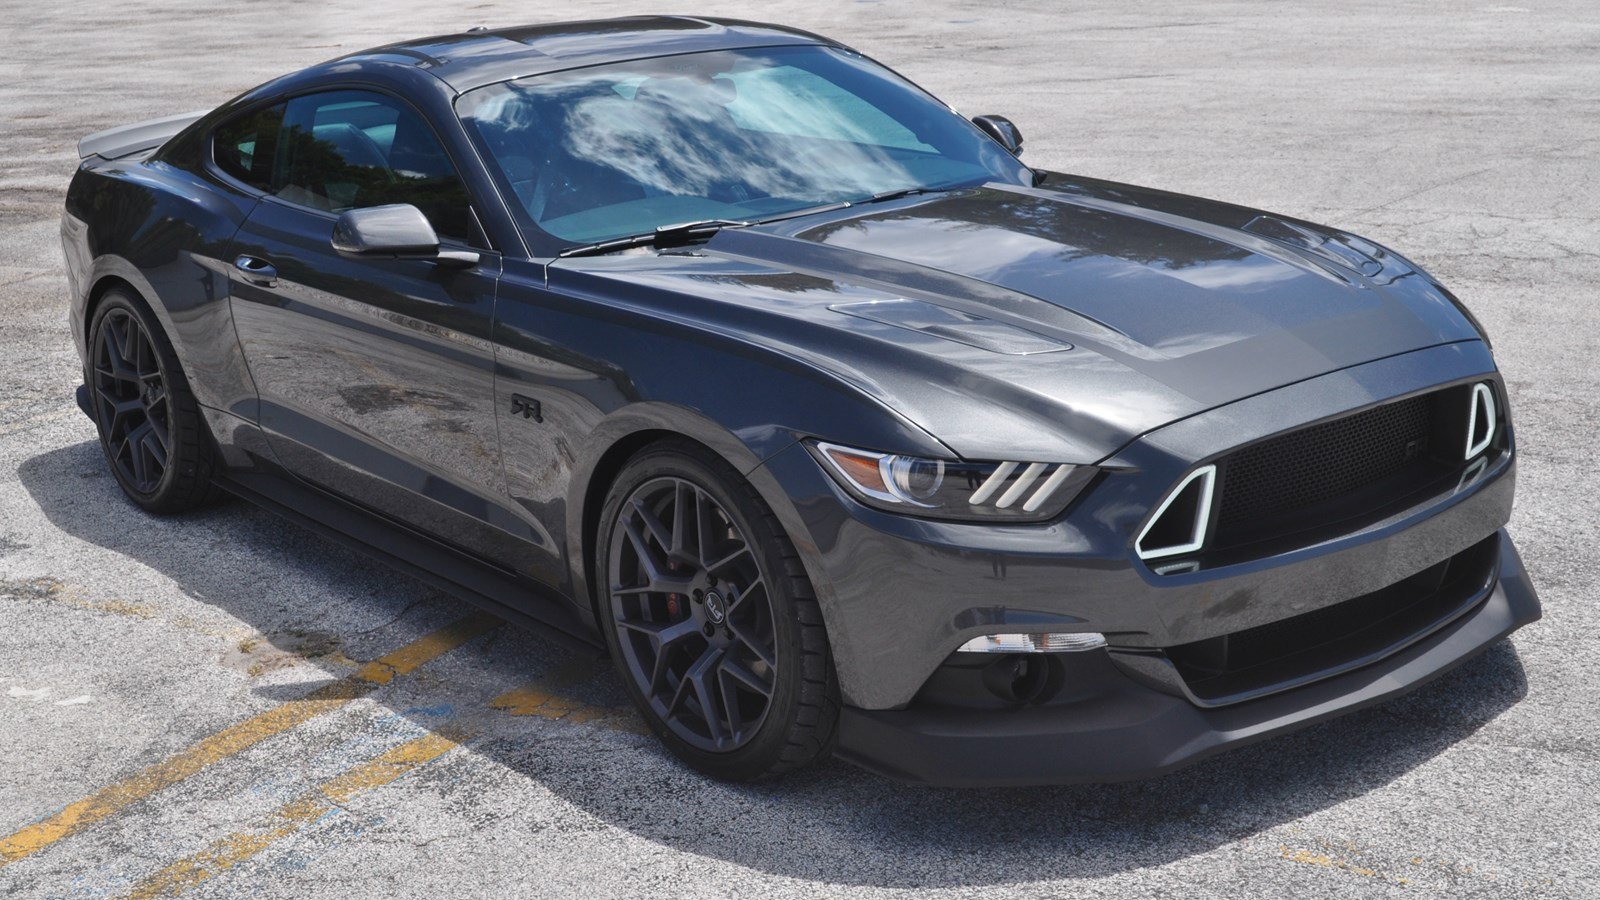 Mustang Gt Premium | Car Release and Reviews 2018-2019